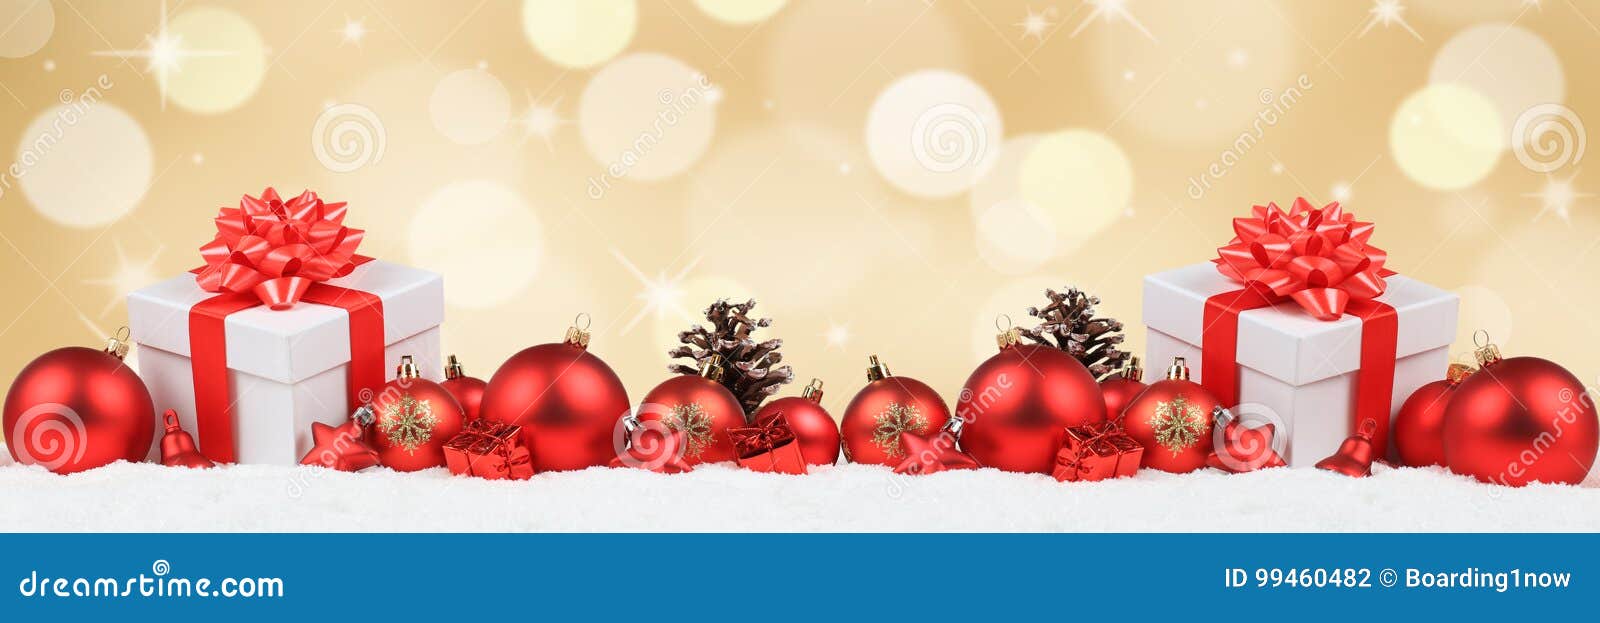 christmas gifts presents balls banner decoration golden background copyspace